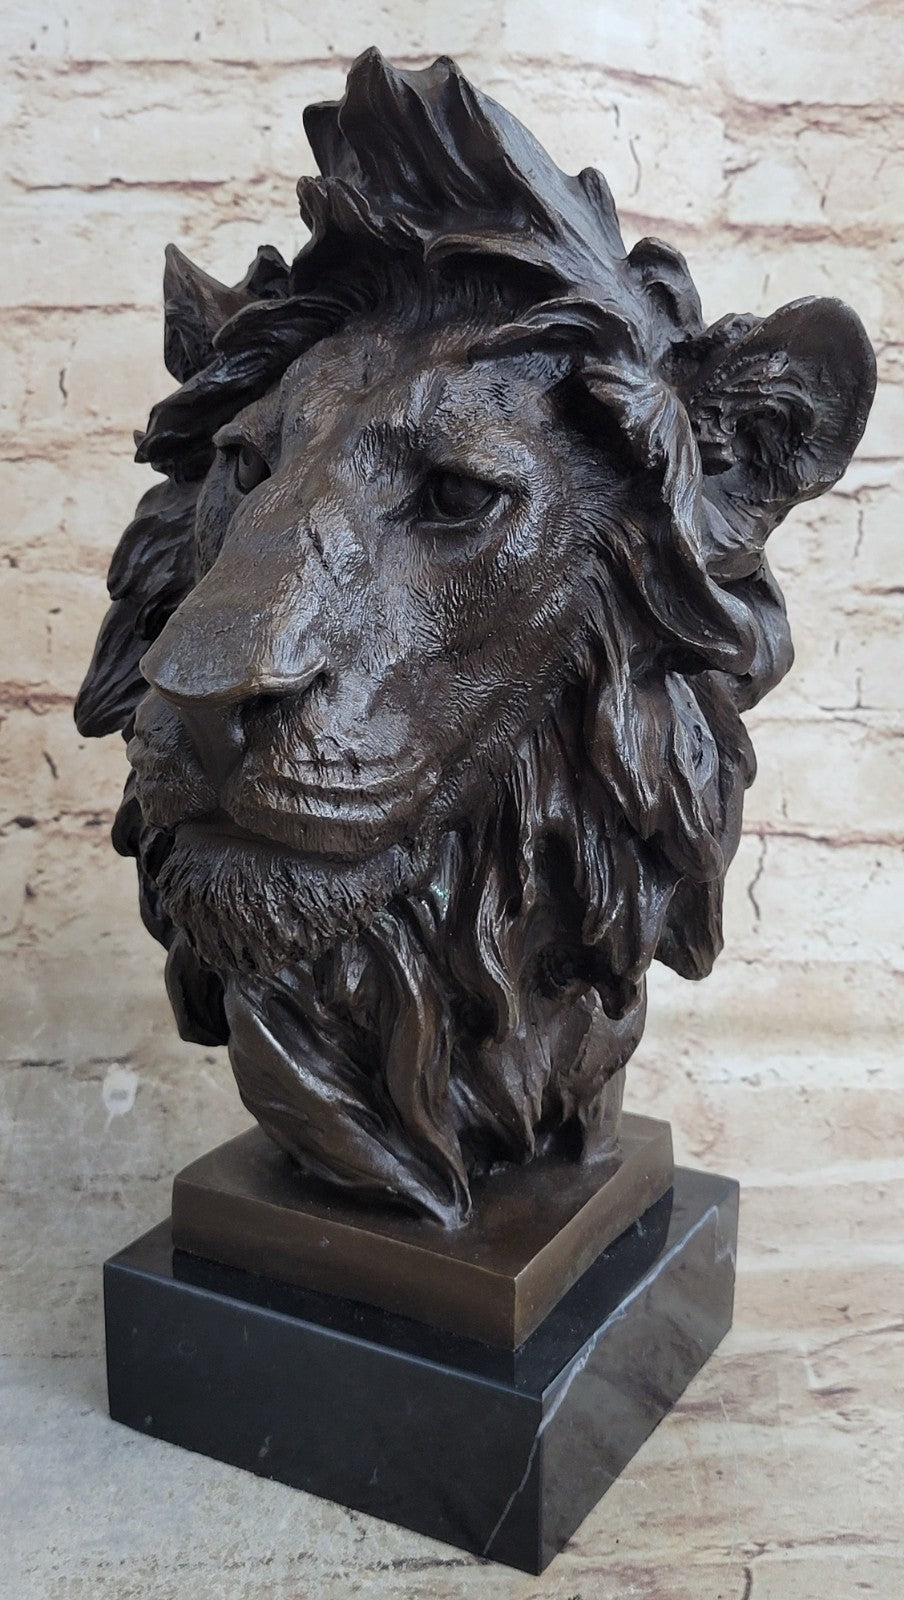 Hot Cast Signed Bronze Royal Lion Statue Sculpture Bust Marble Base Figurine Art